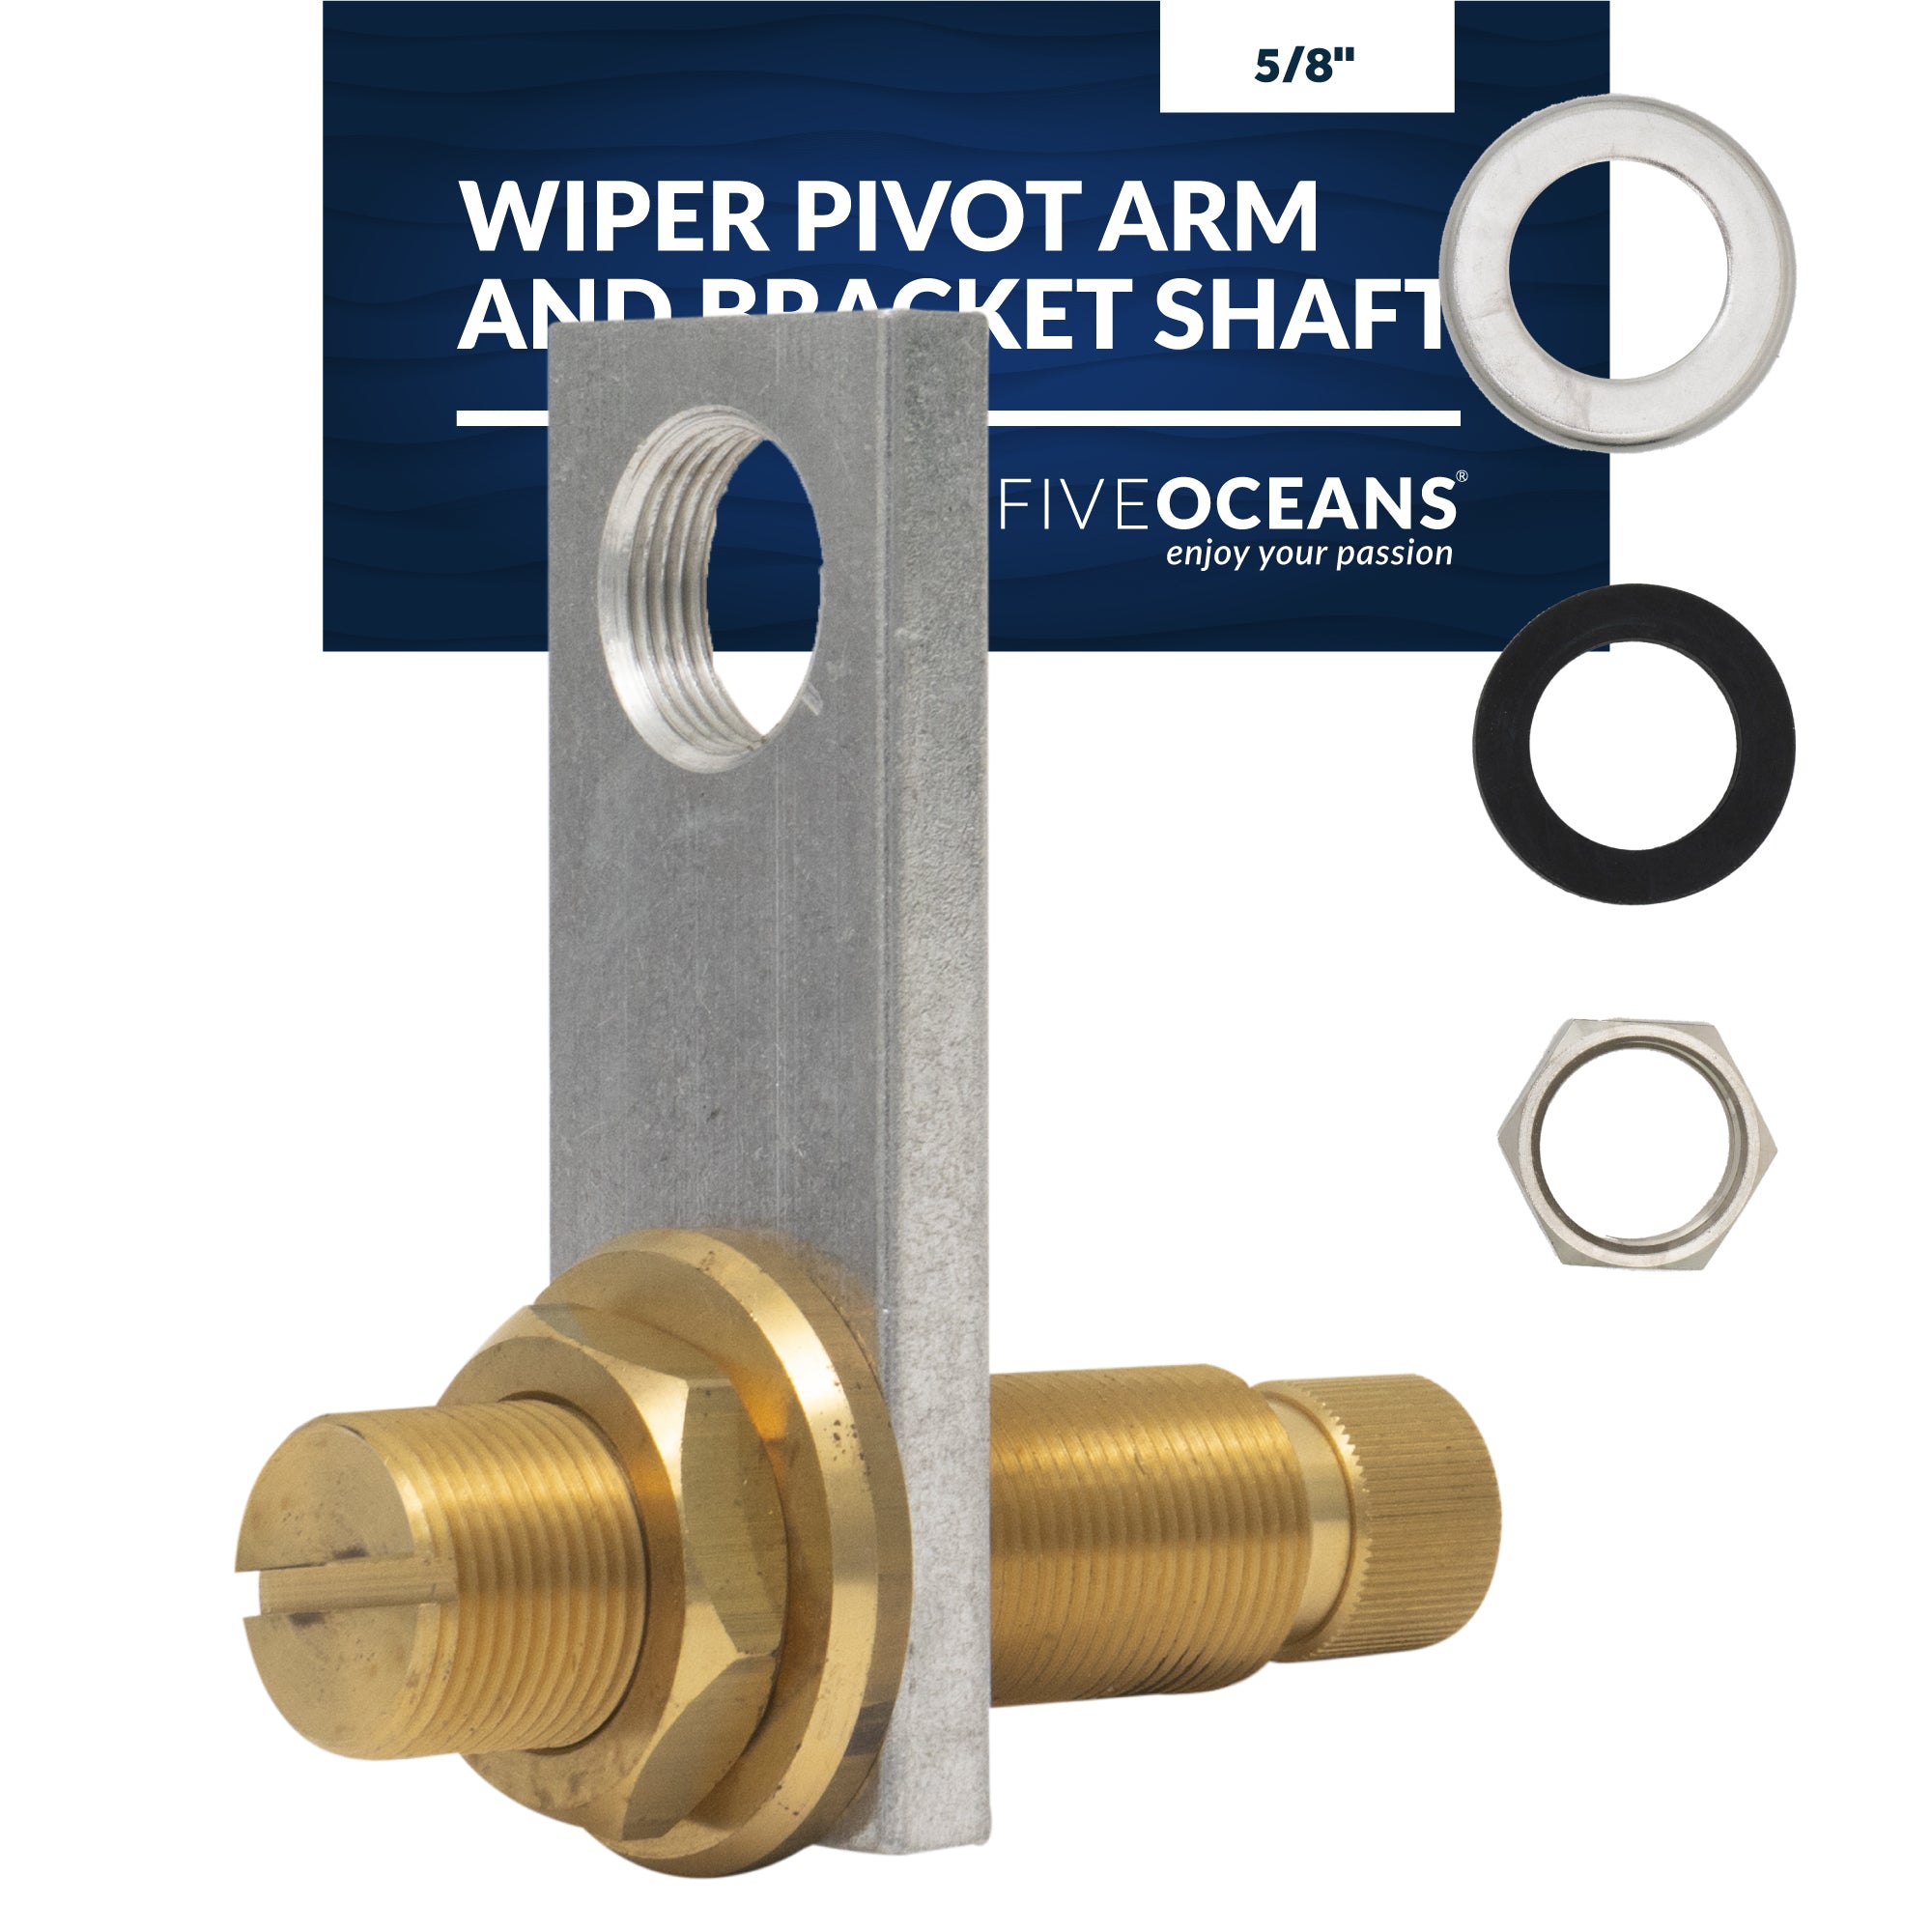 TMC Wiper Pivot Arm and Bracket Shaft 5/8" - FO1598